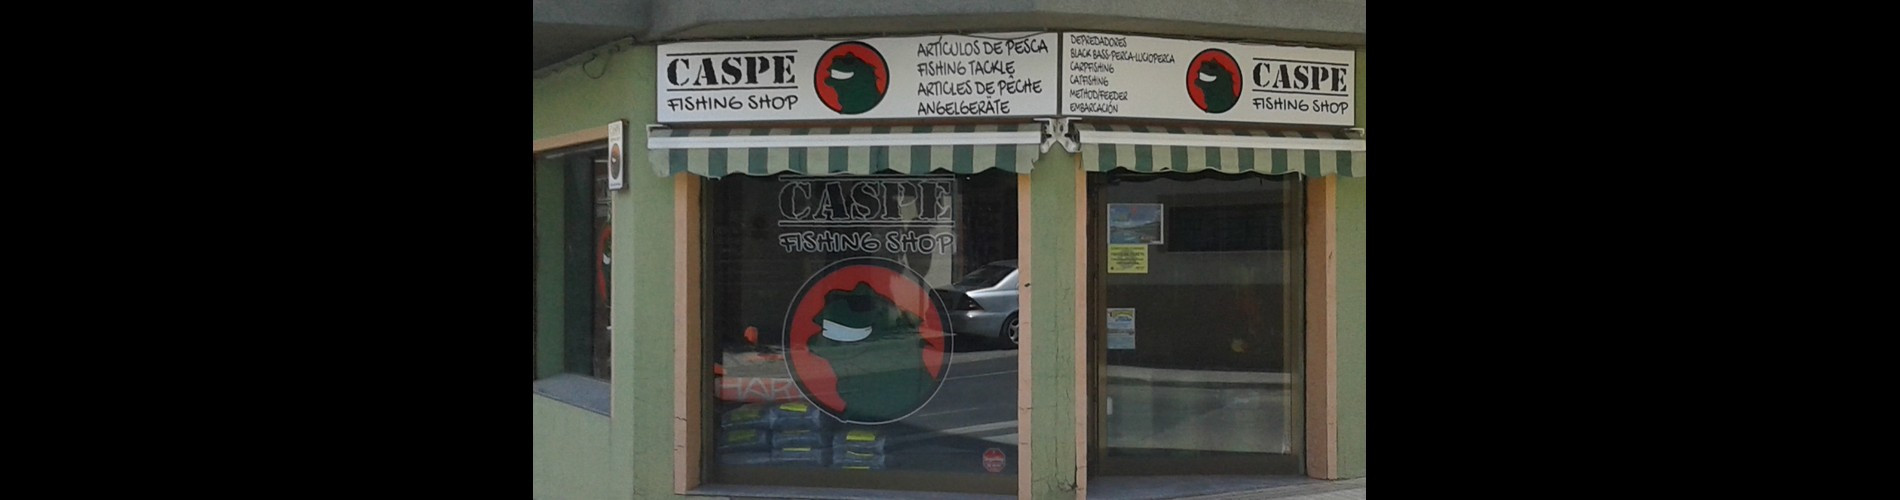 Caspe Fishing Shop